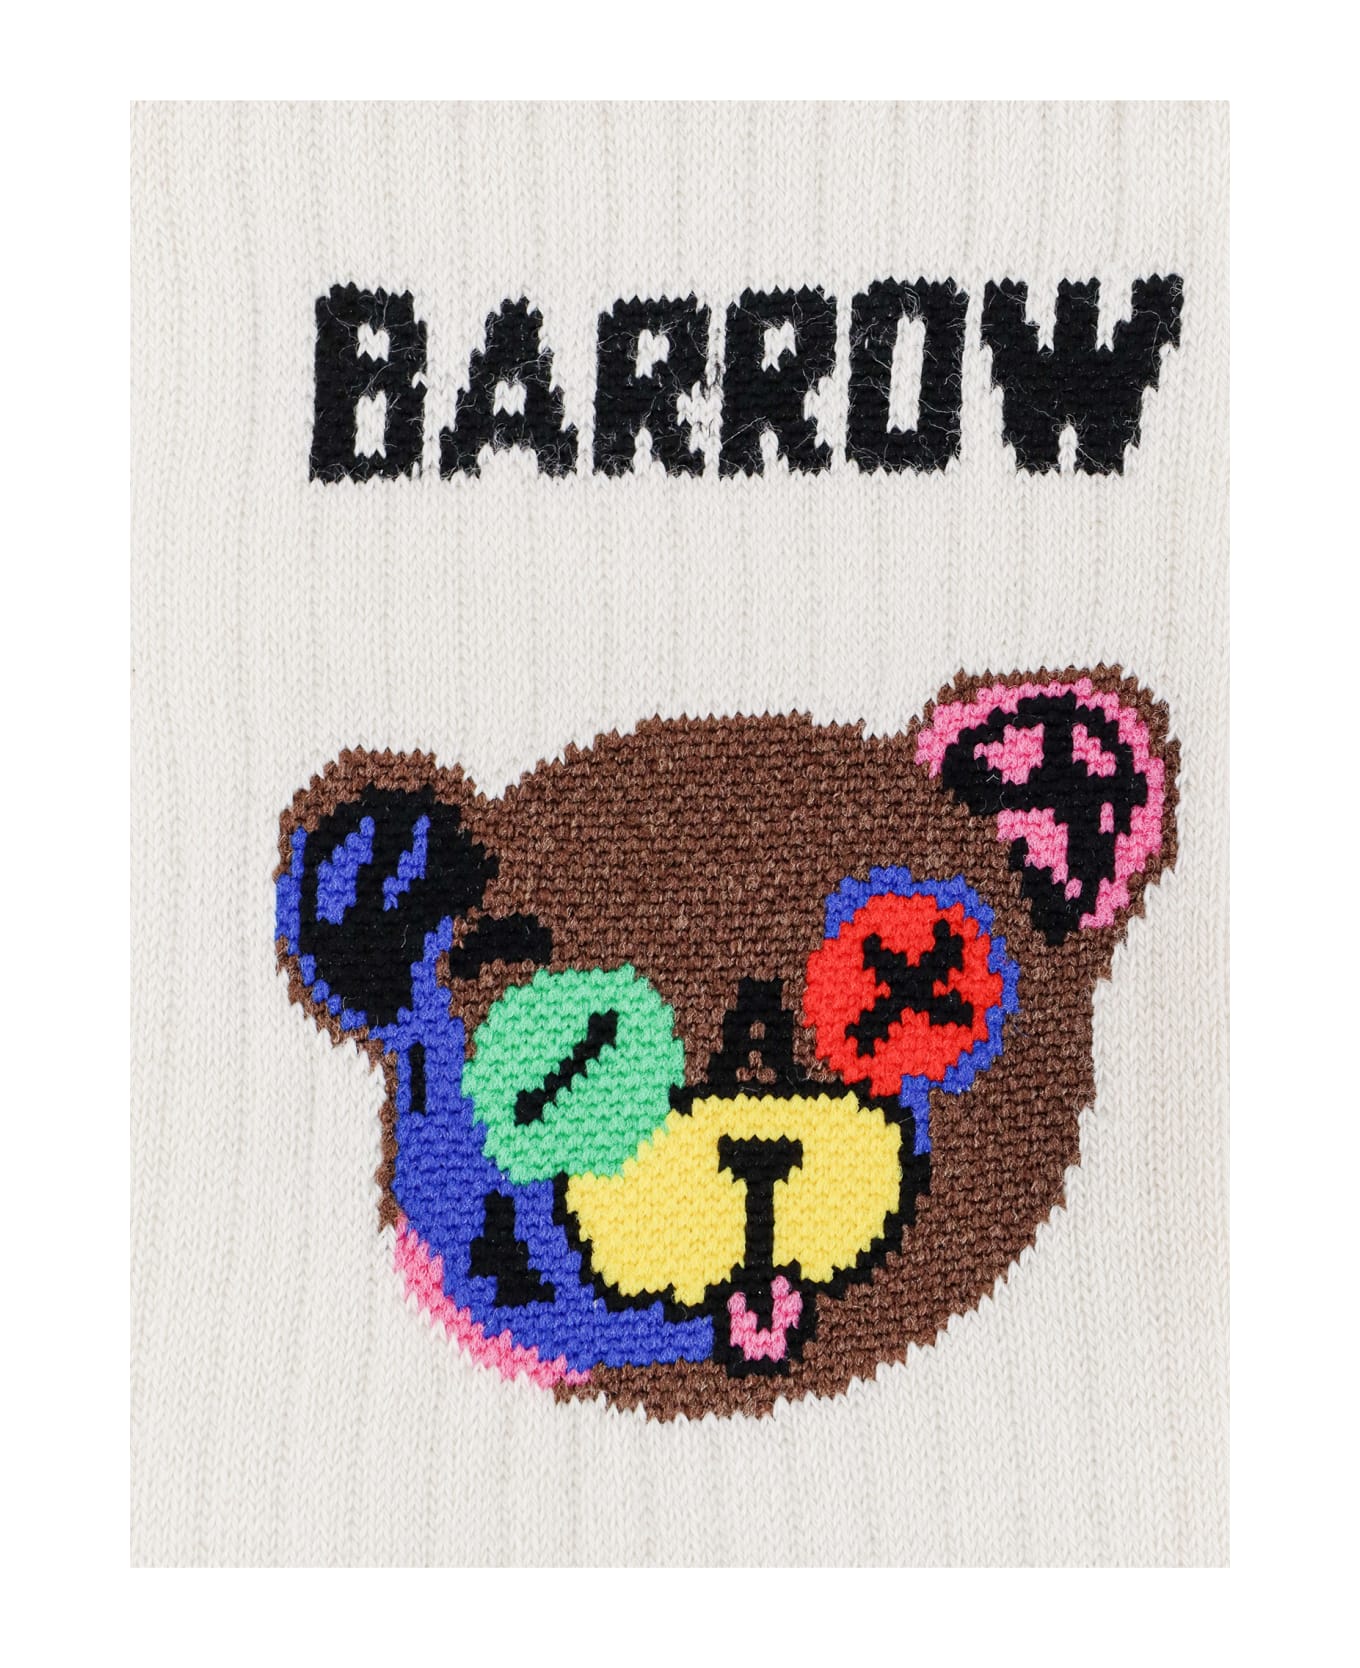 Barrow Socks - WHITE 靴下